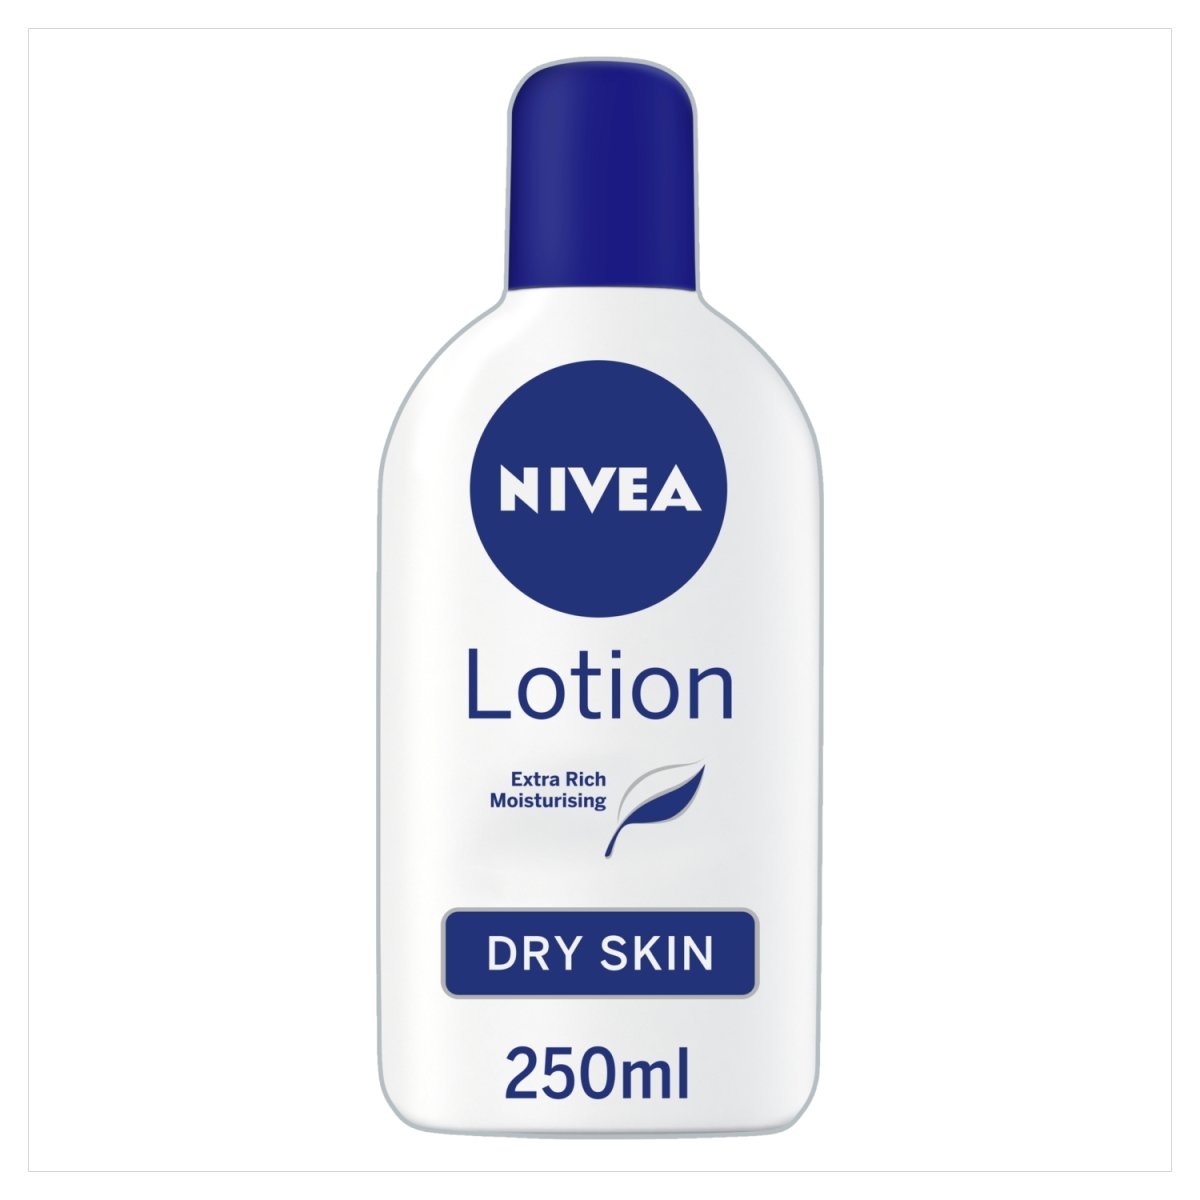 Nivea Lotion Dry Skin - Intamarque 5025970802183